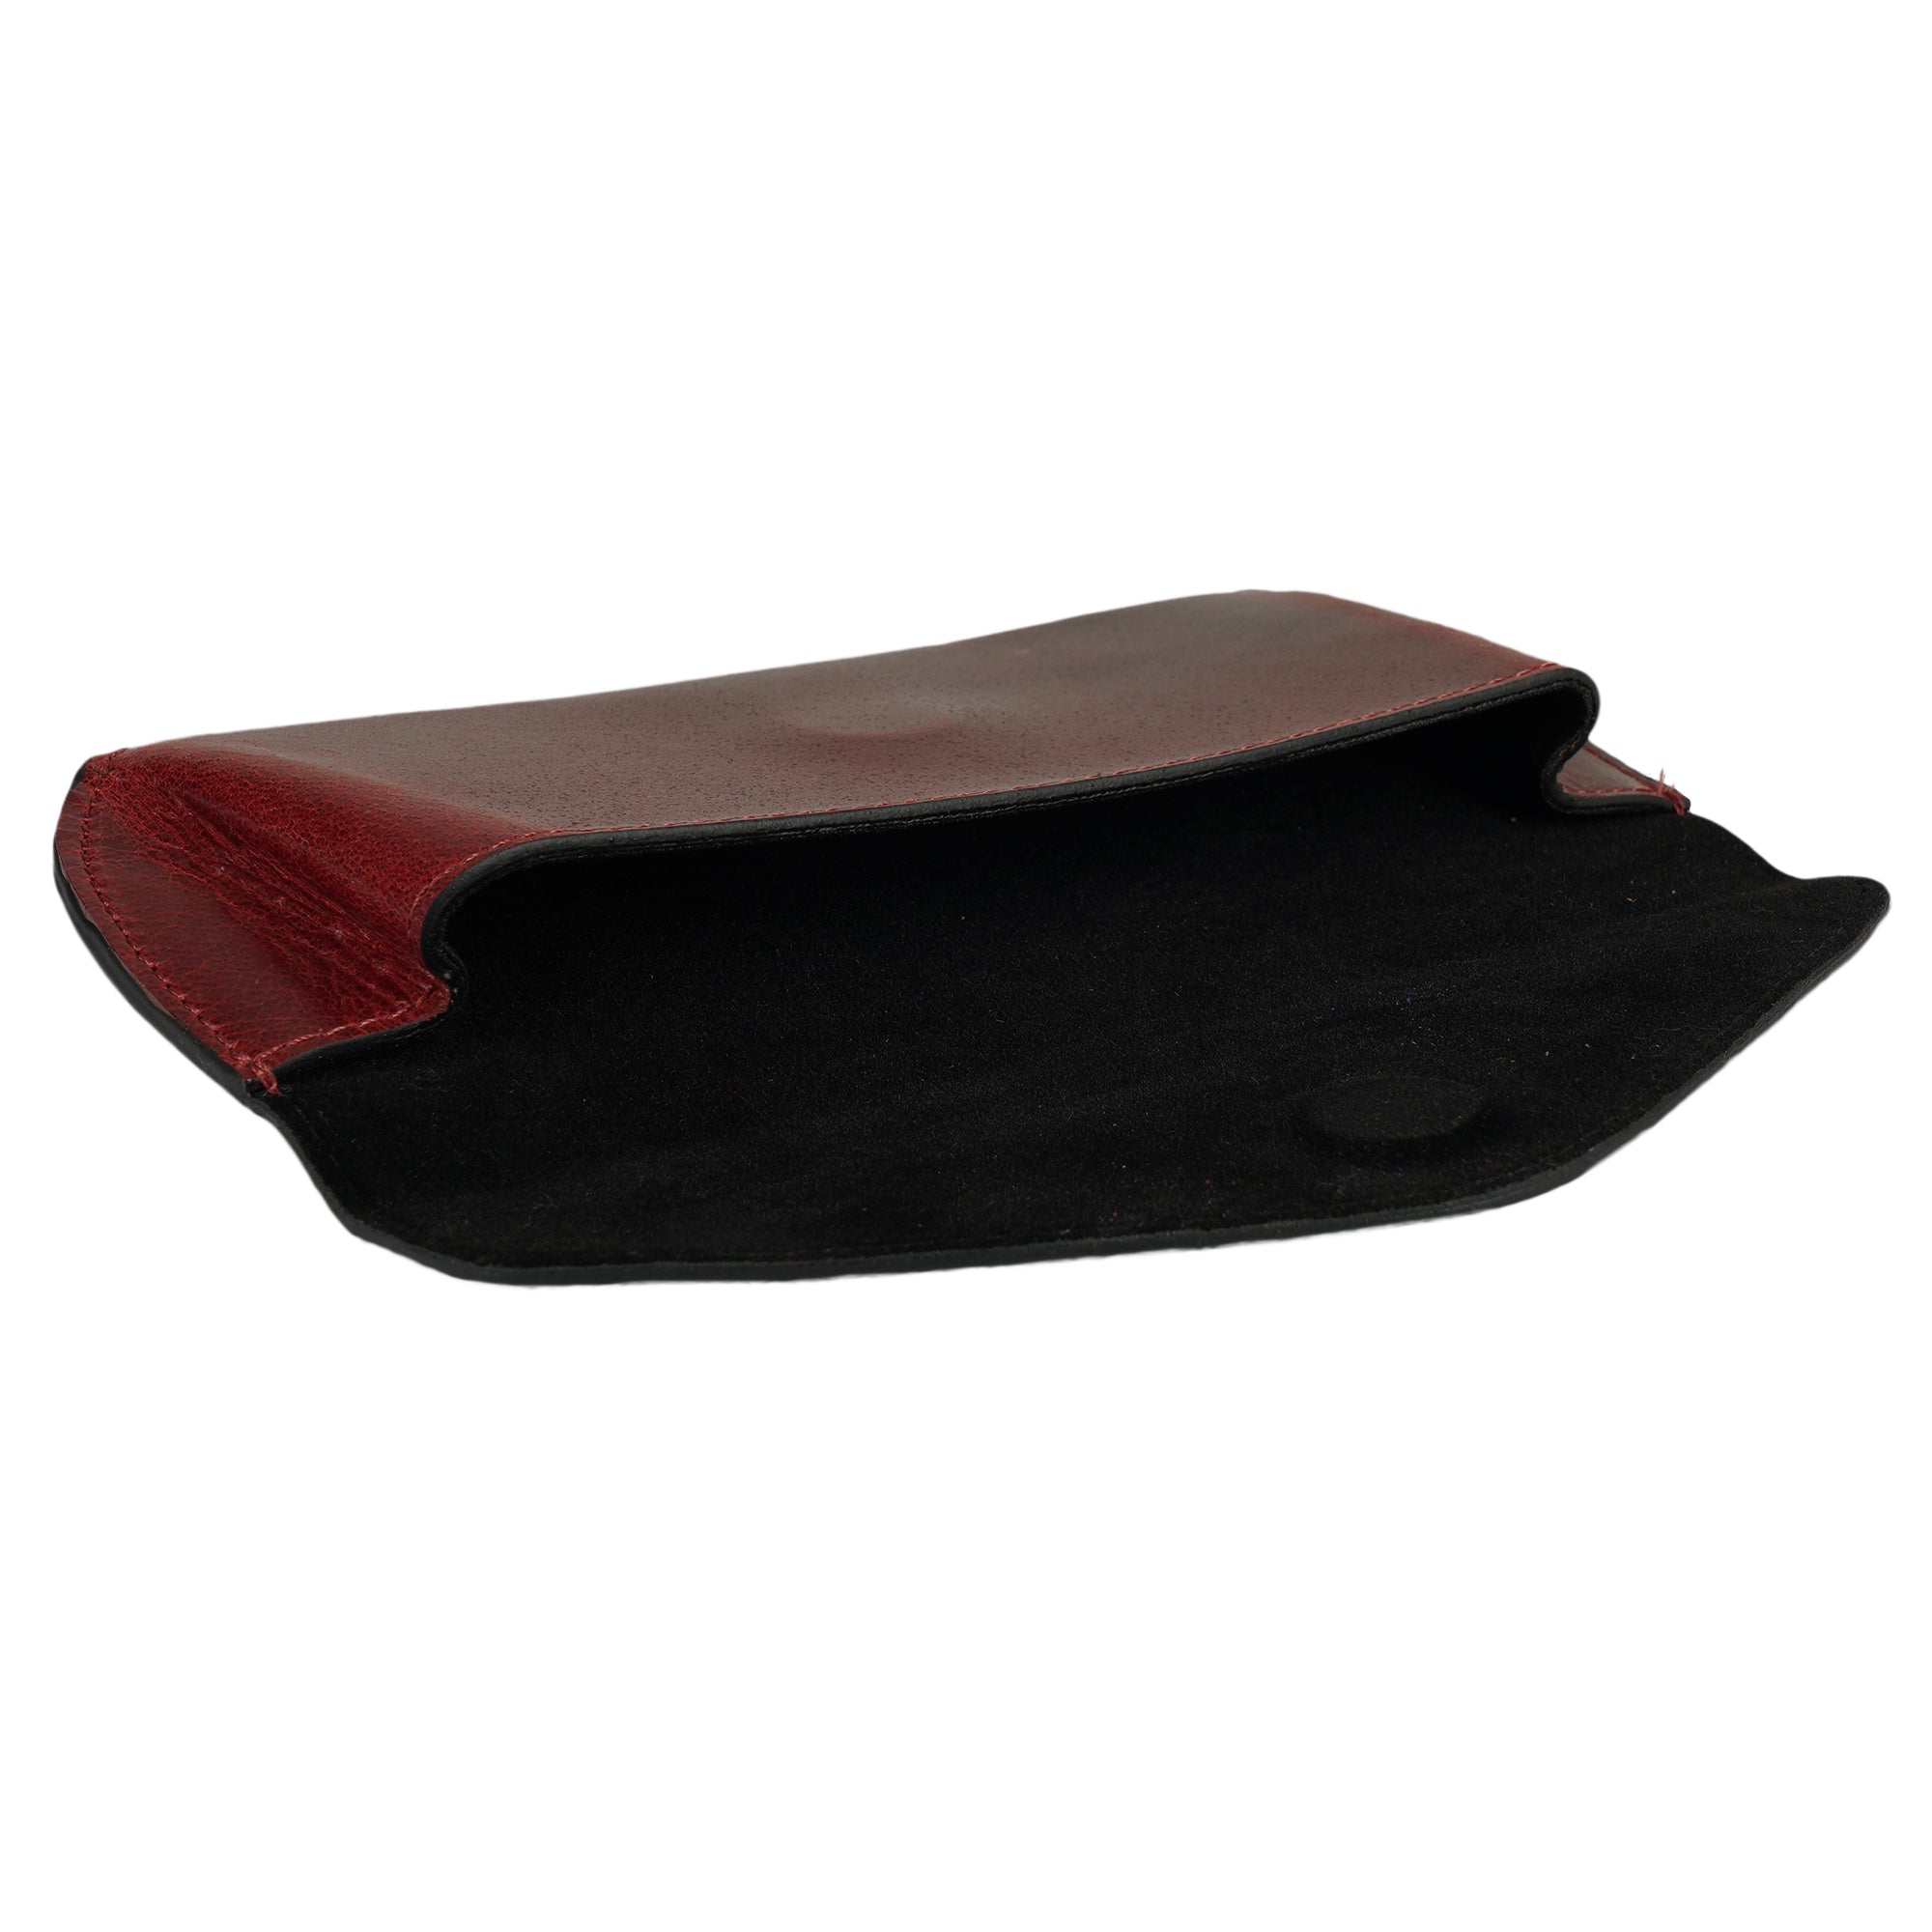 Premium Luxury Leather Cases Red Color